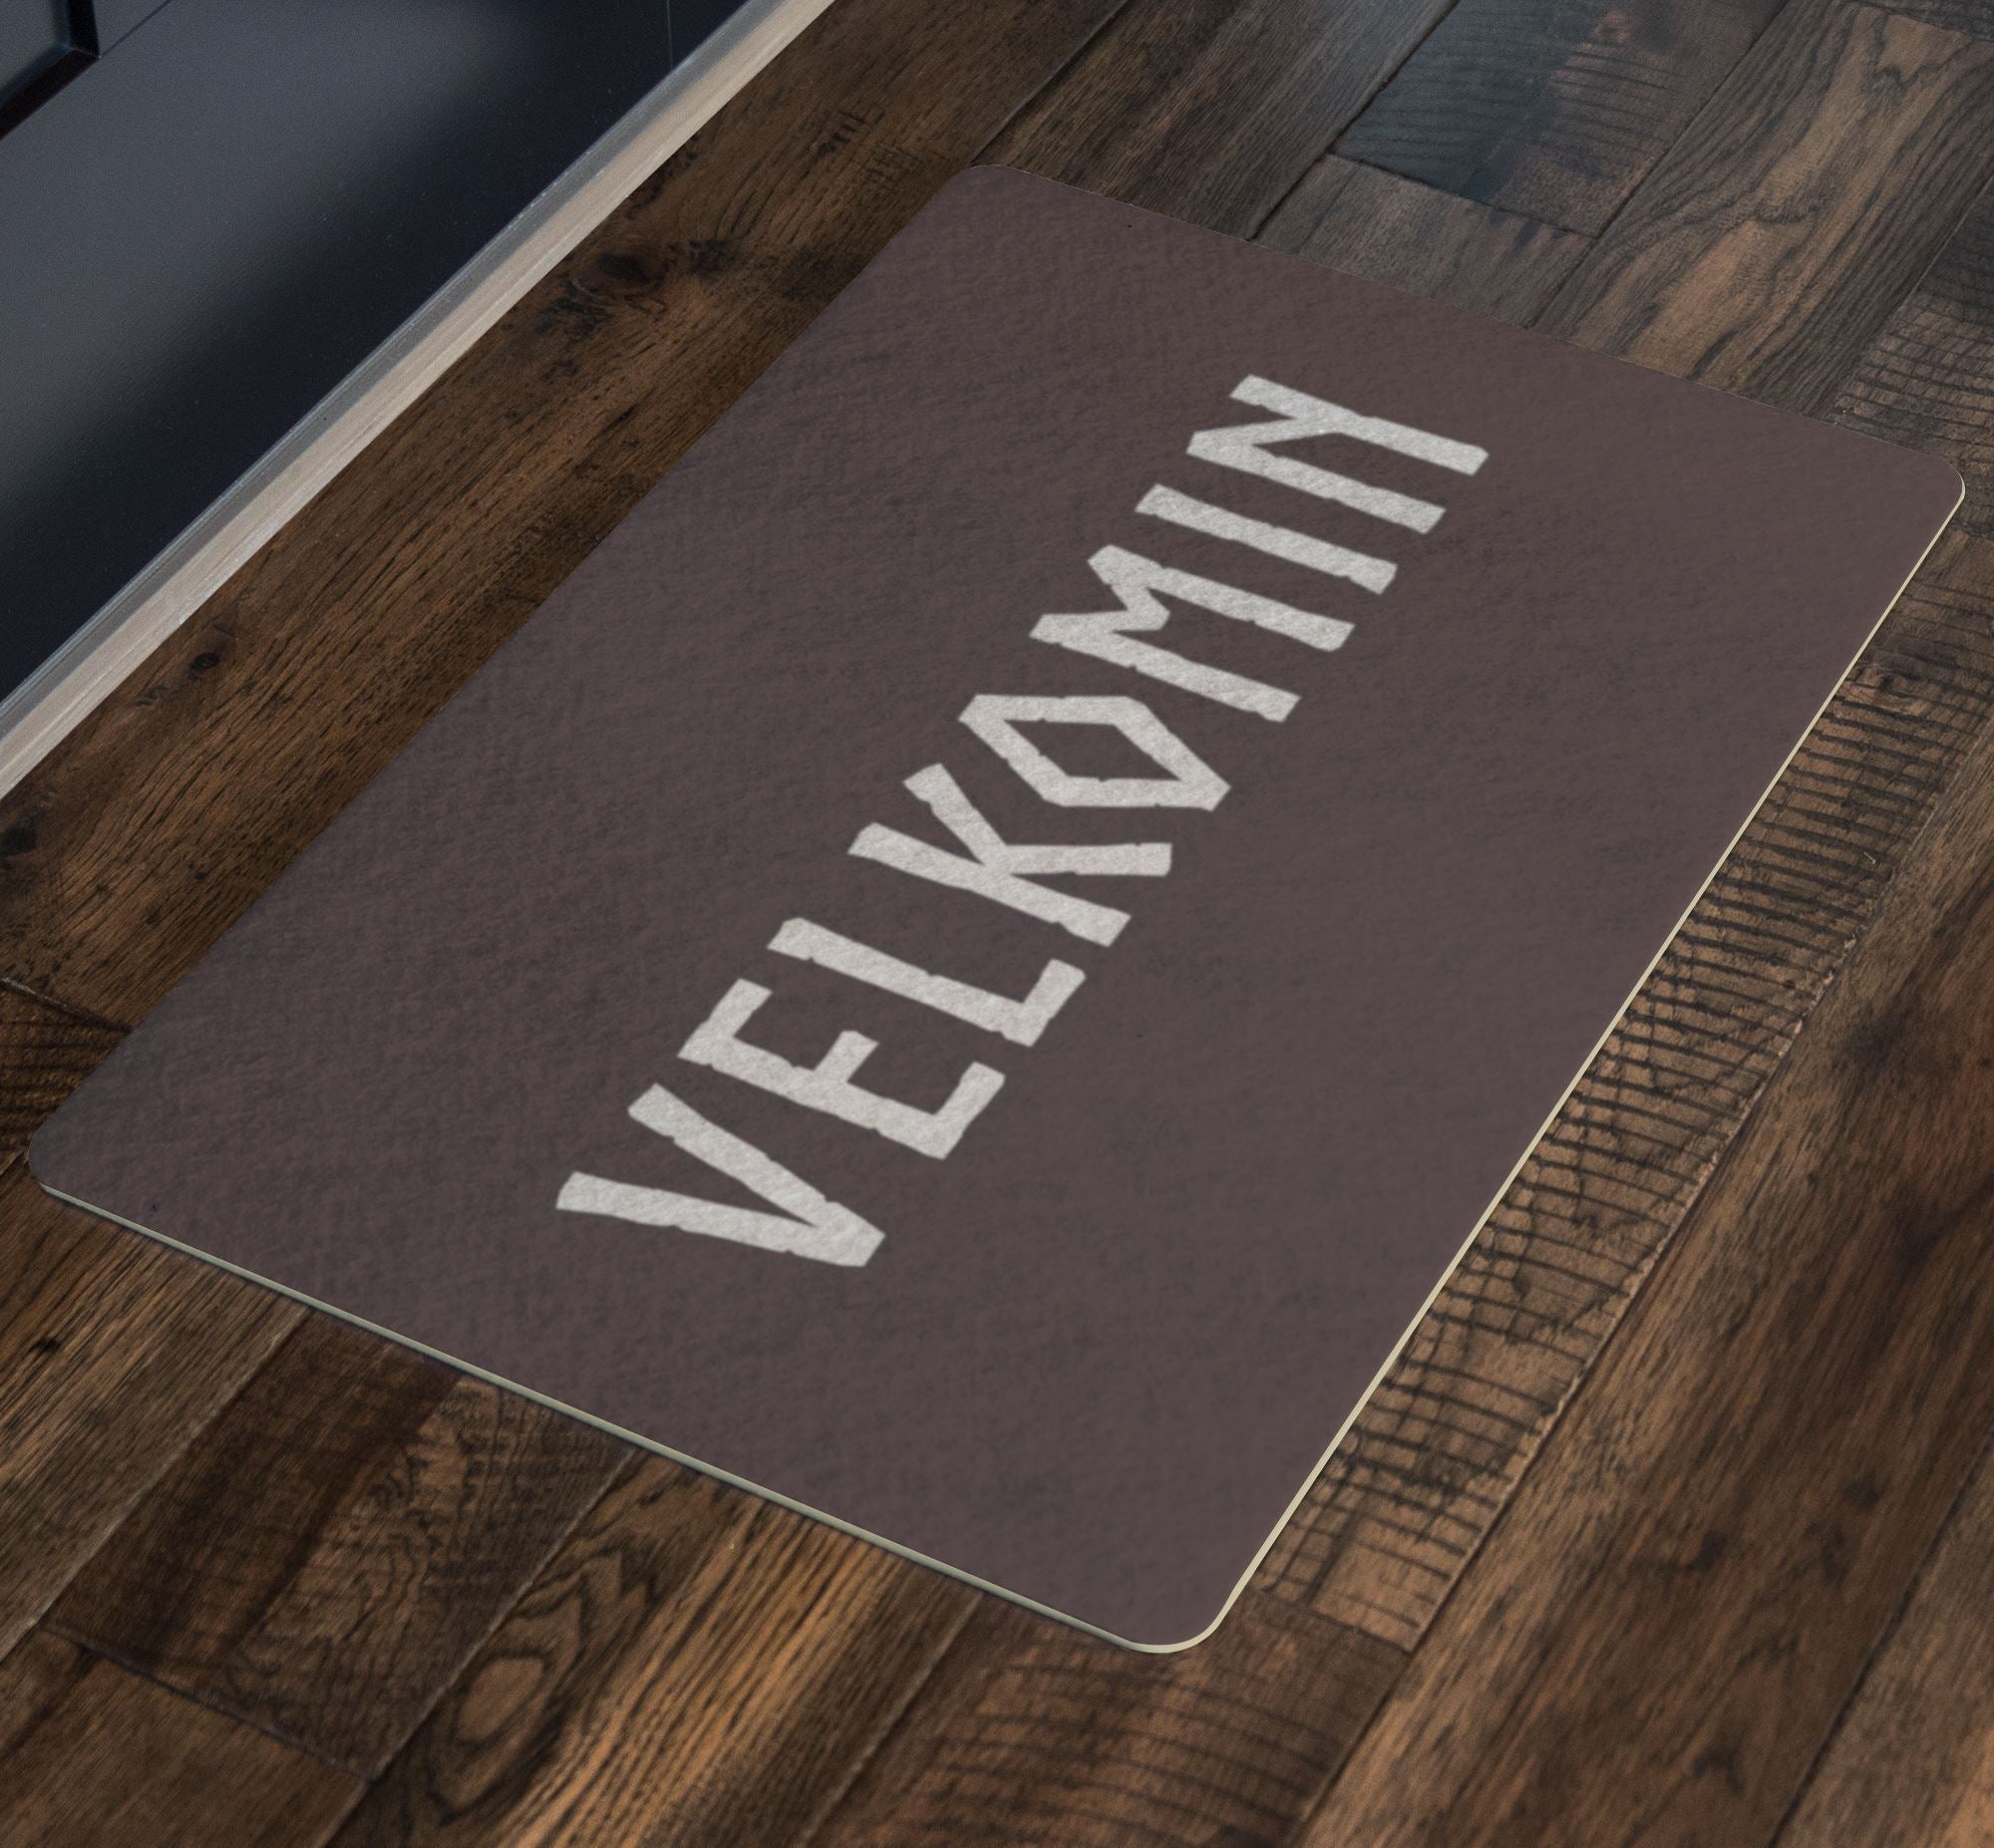 Old Norse Velkomin Welcome Doormat – Blue Pagan